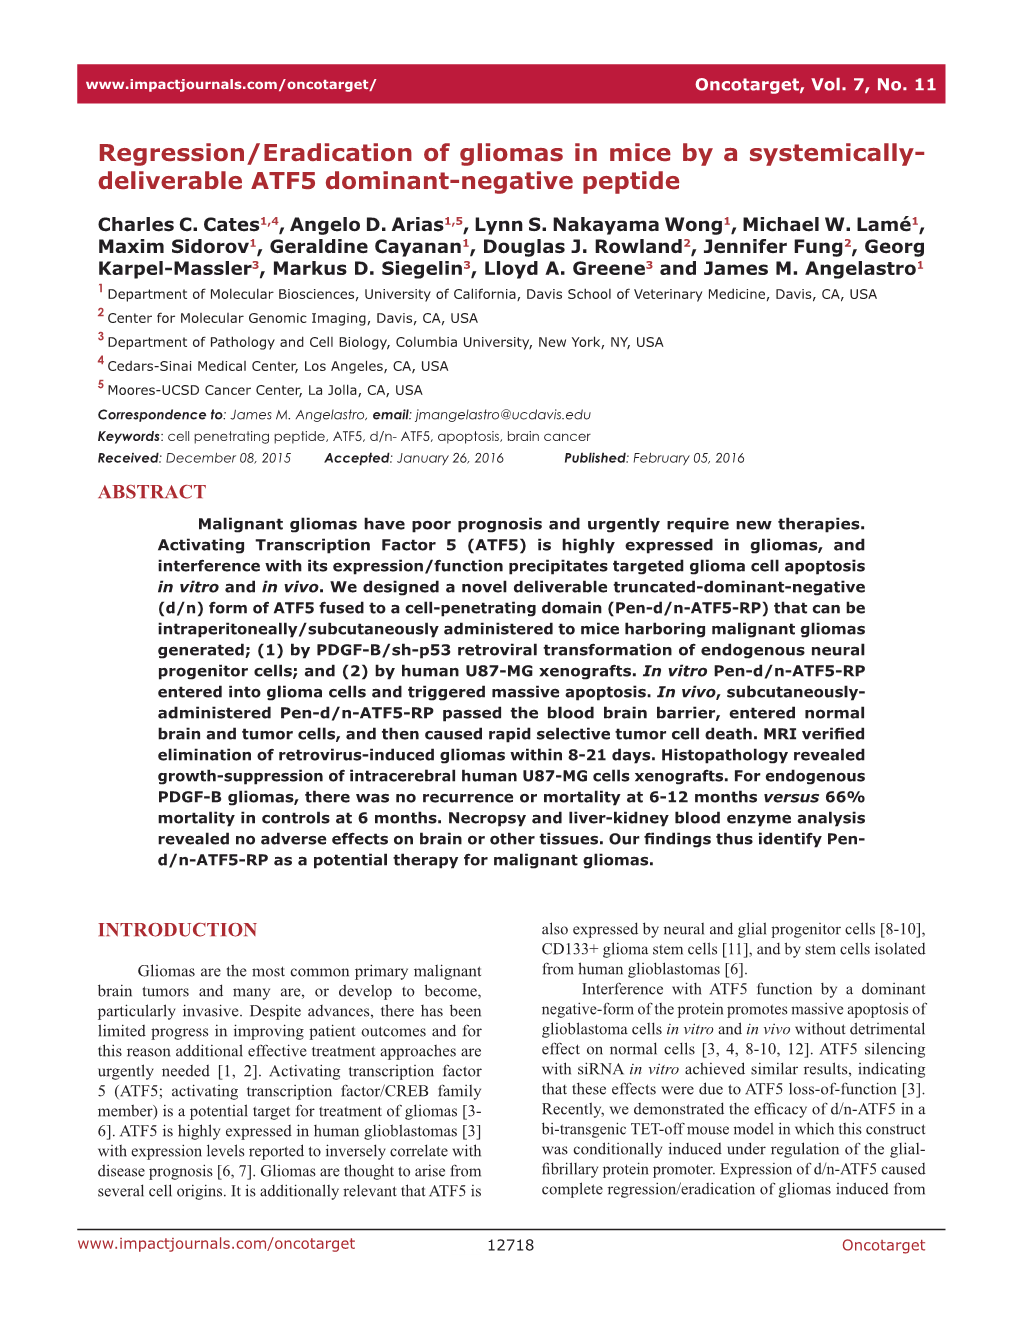 Deliverable ATF5 Dominant-Negative Peptide